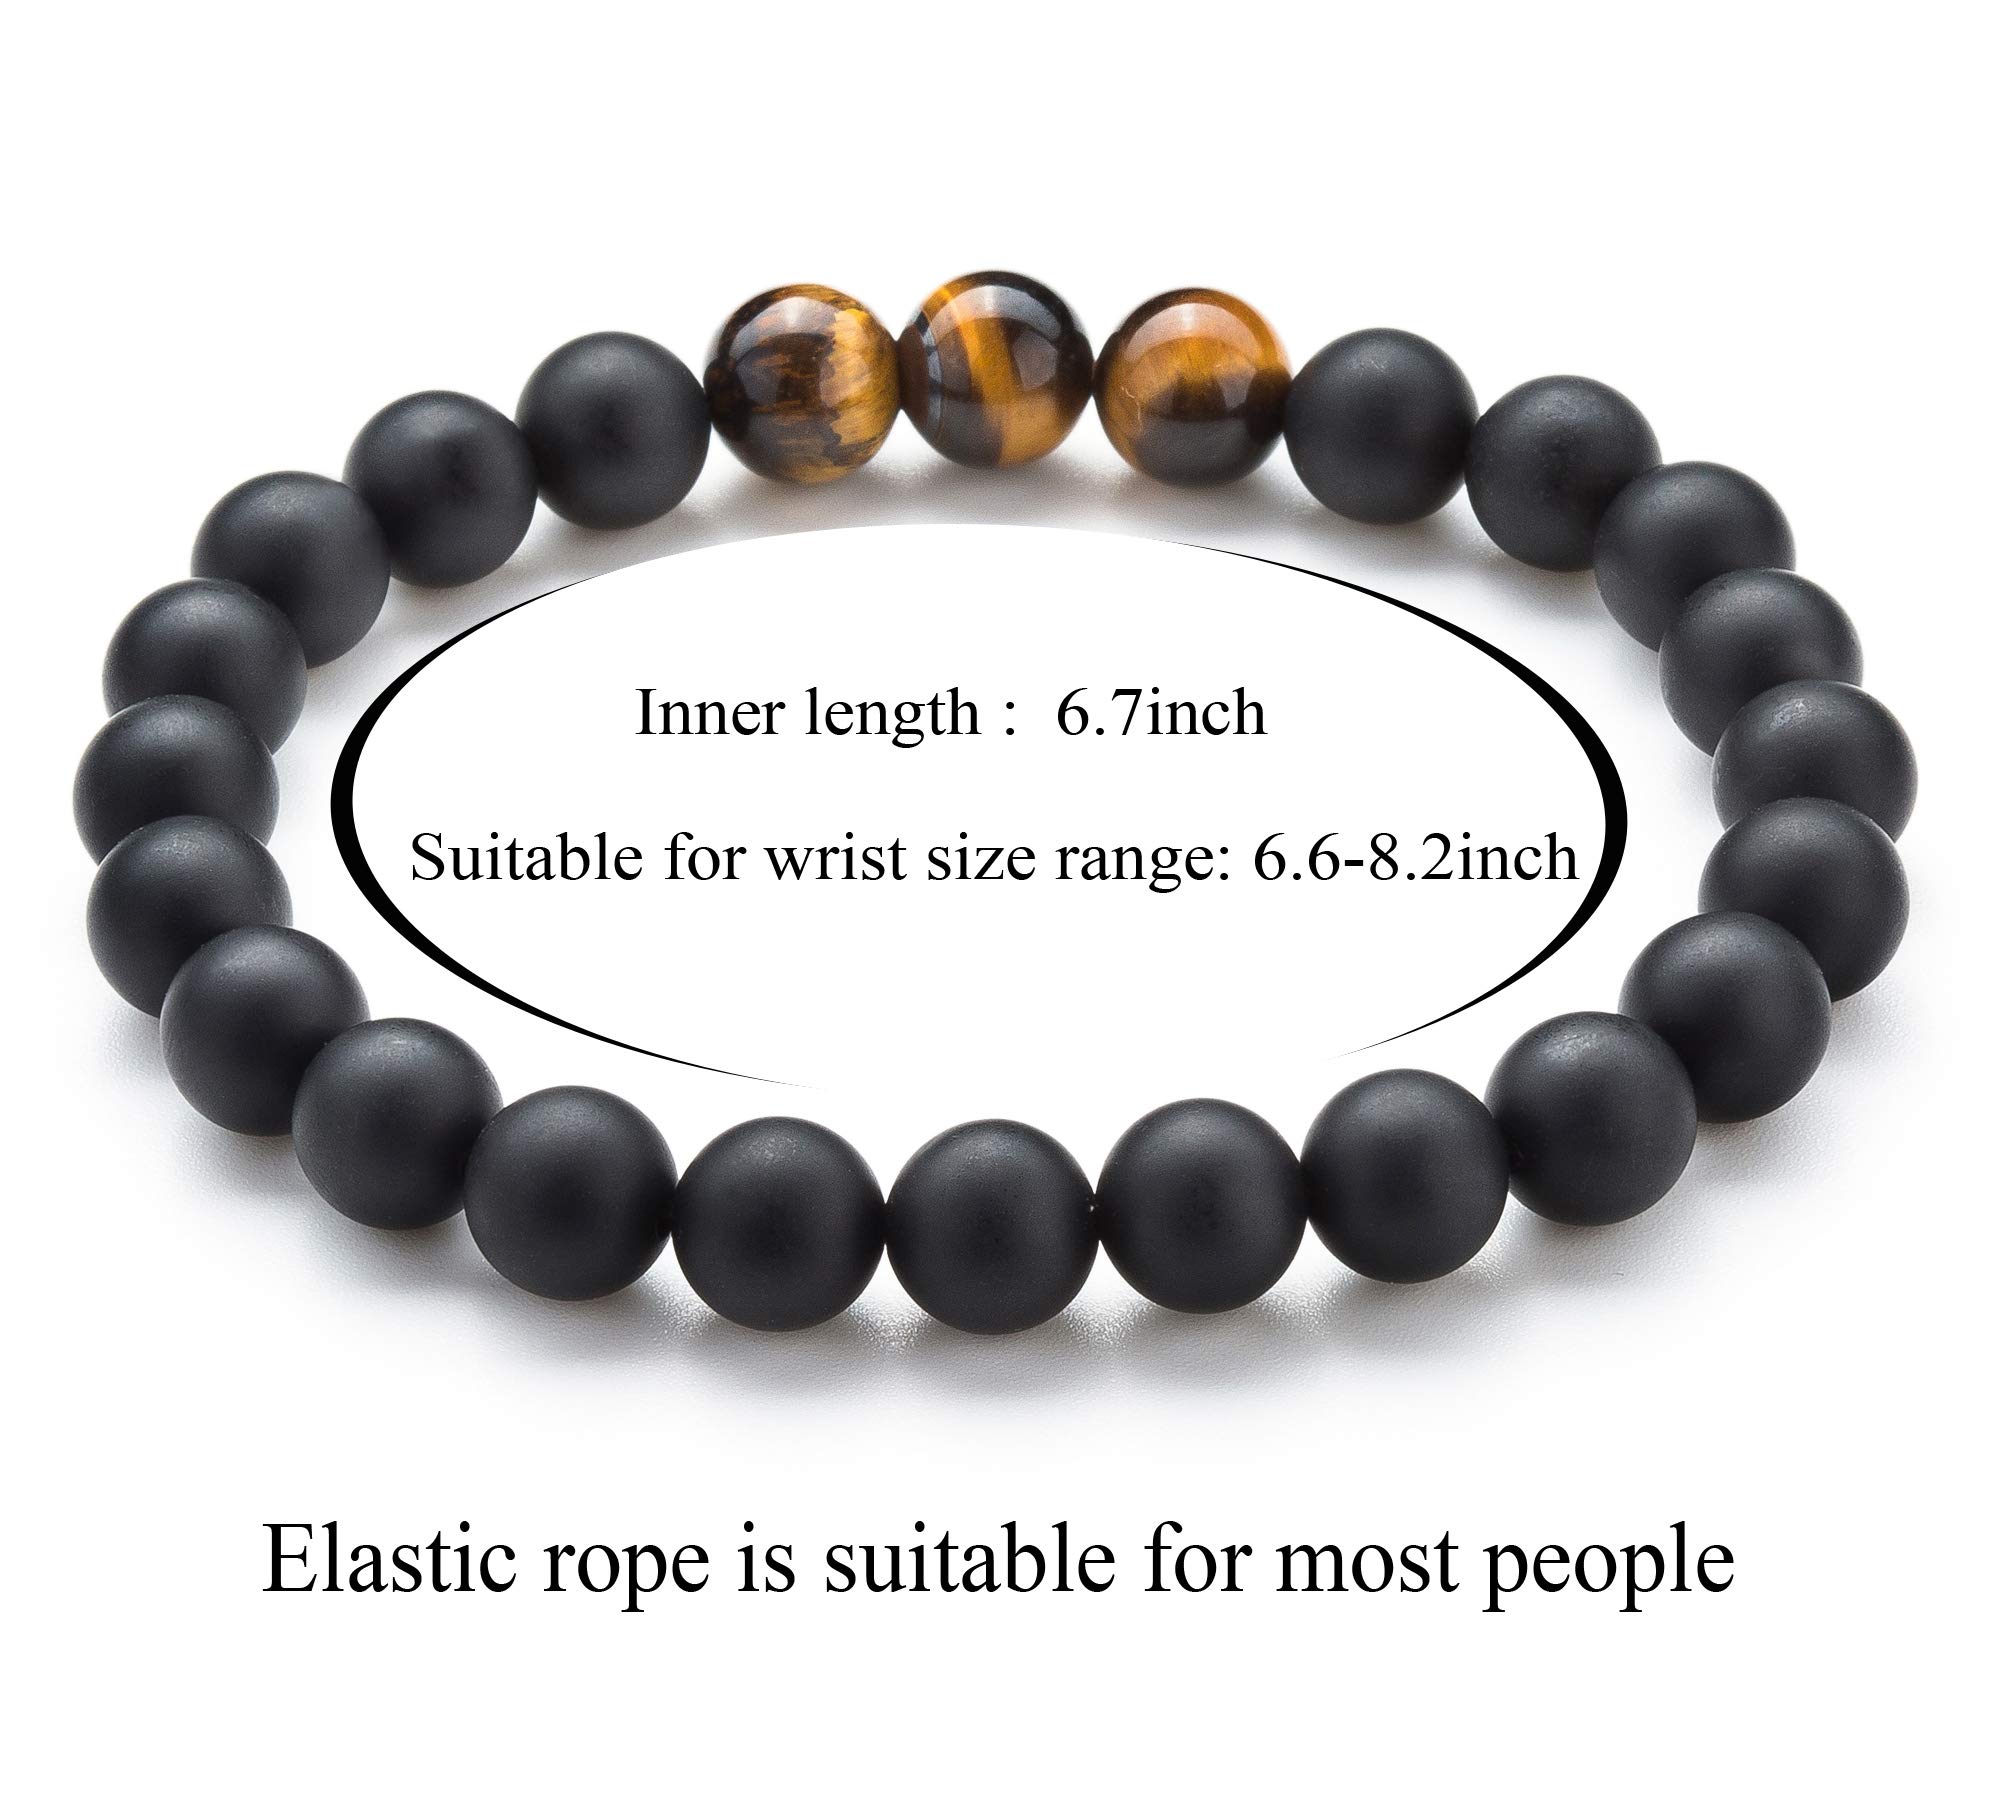 Hamoery Men Women 8mm Tiger Eye Stone Beads Bracelet Elastic Natural Stone Yoga Bracelet Bangle-21003